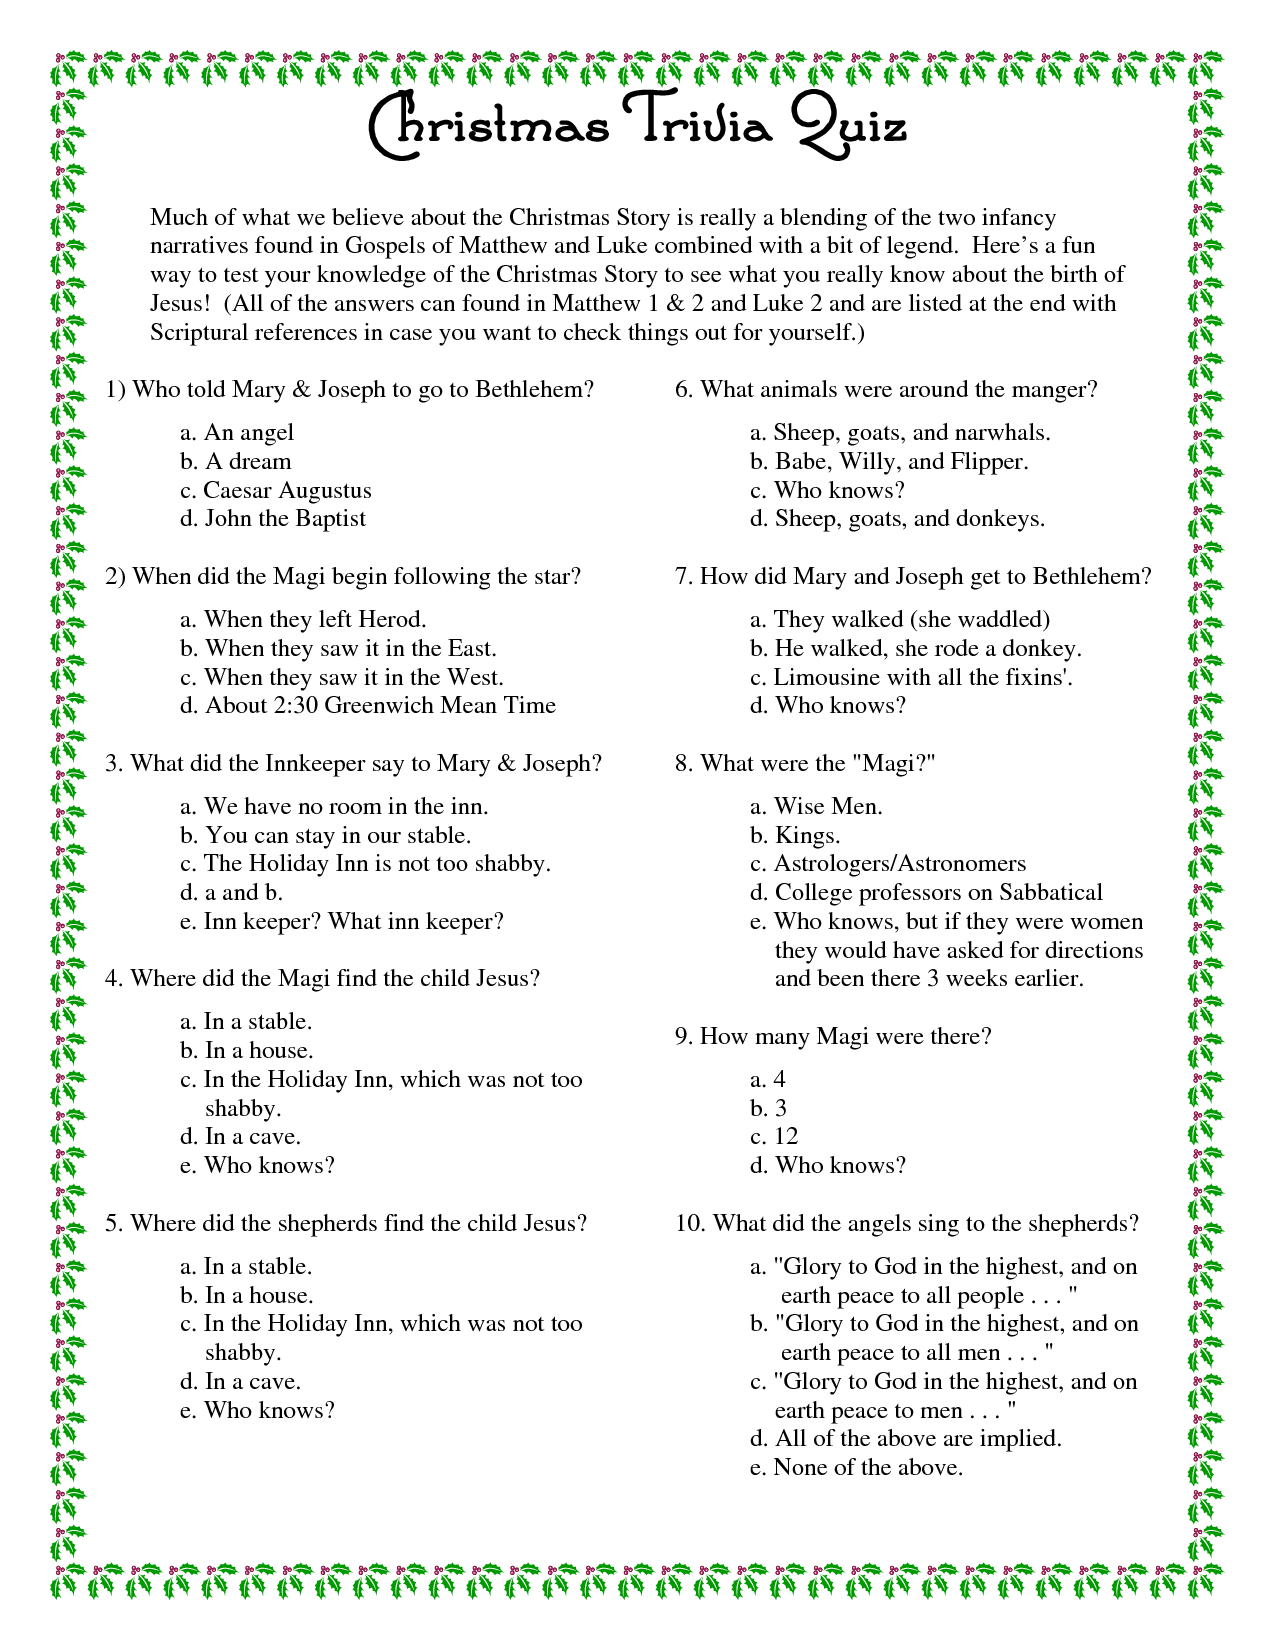 Printable+Christmas+Trivia+Questions+And+Answers | Christmas - Printable Christmas Puzzles And Quizzes